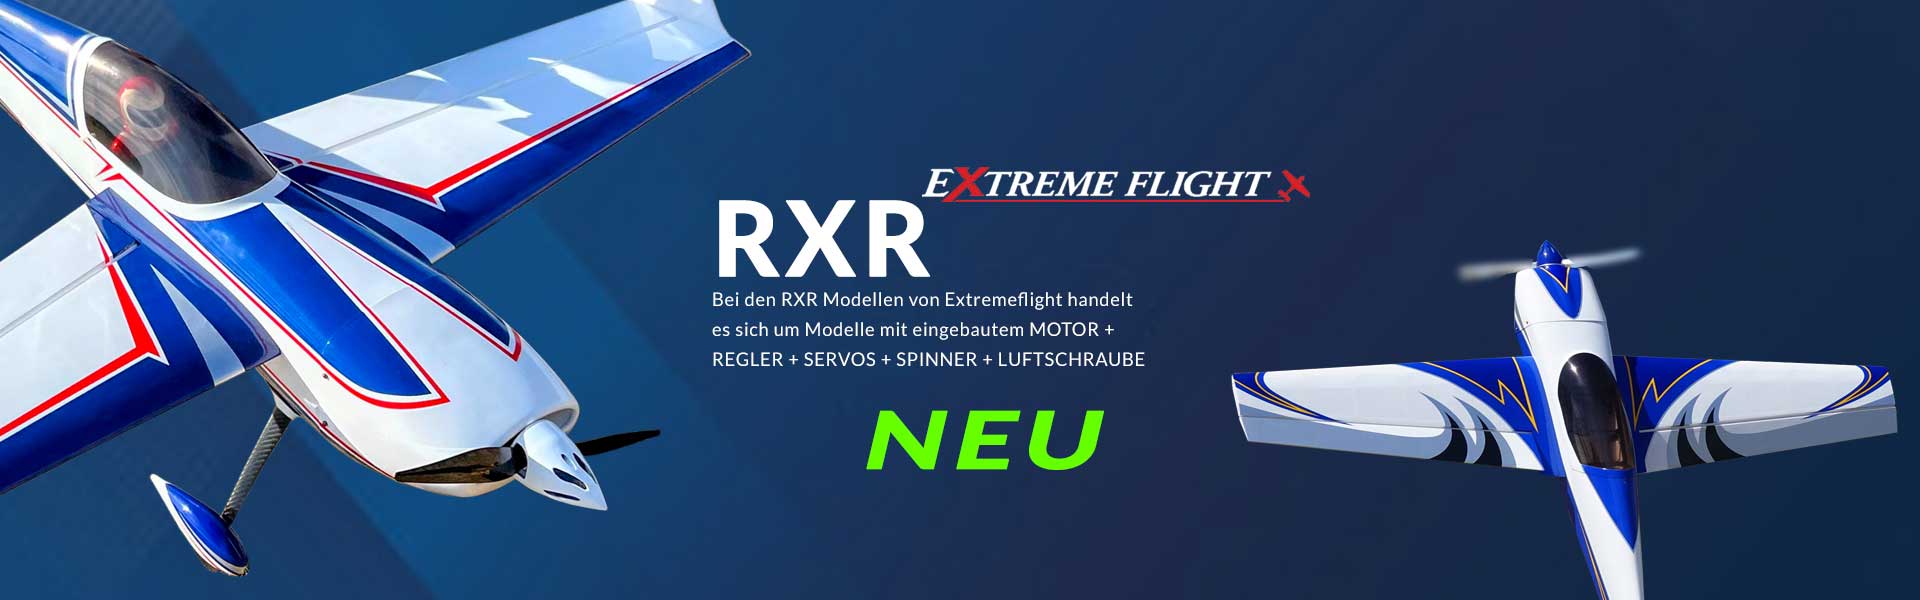 Extremeflight_RXR-1920x600